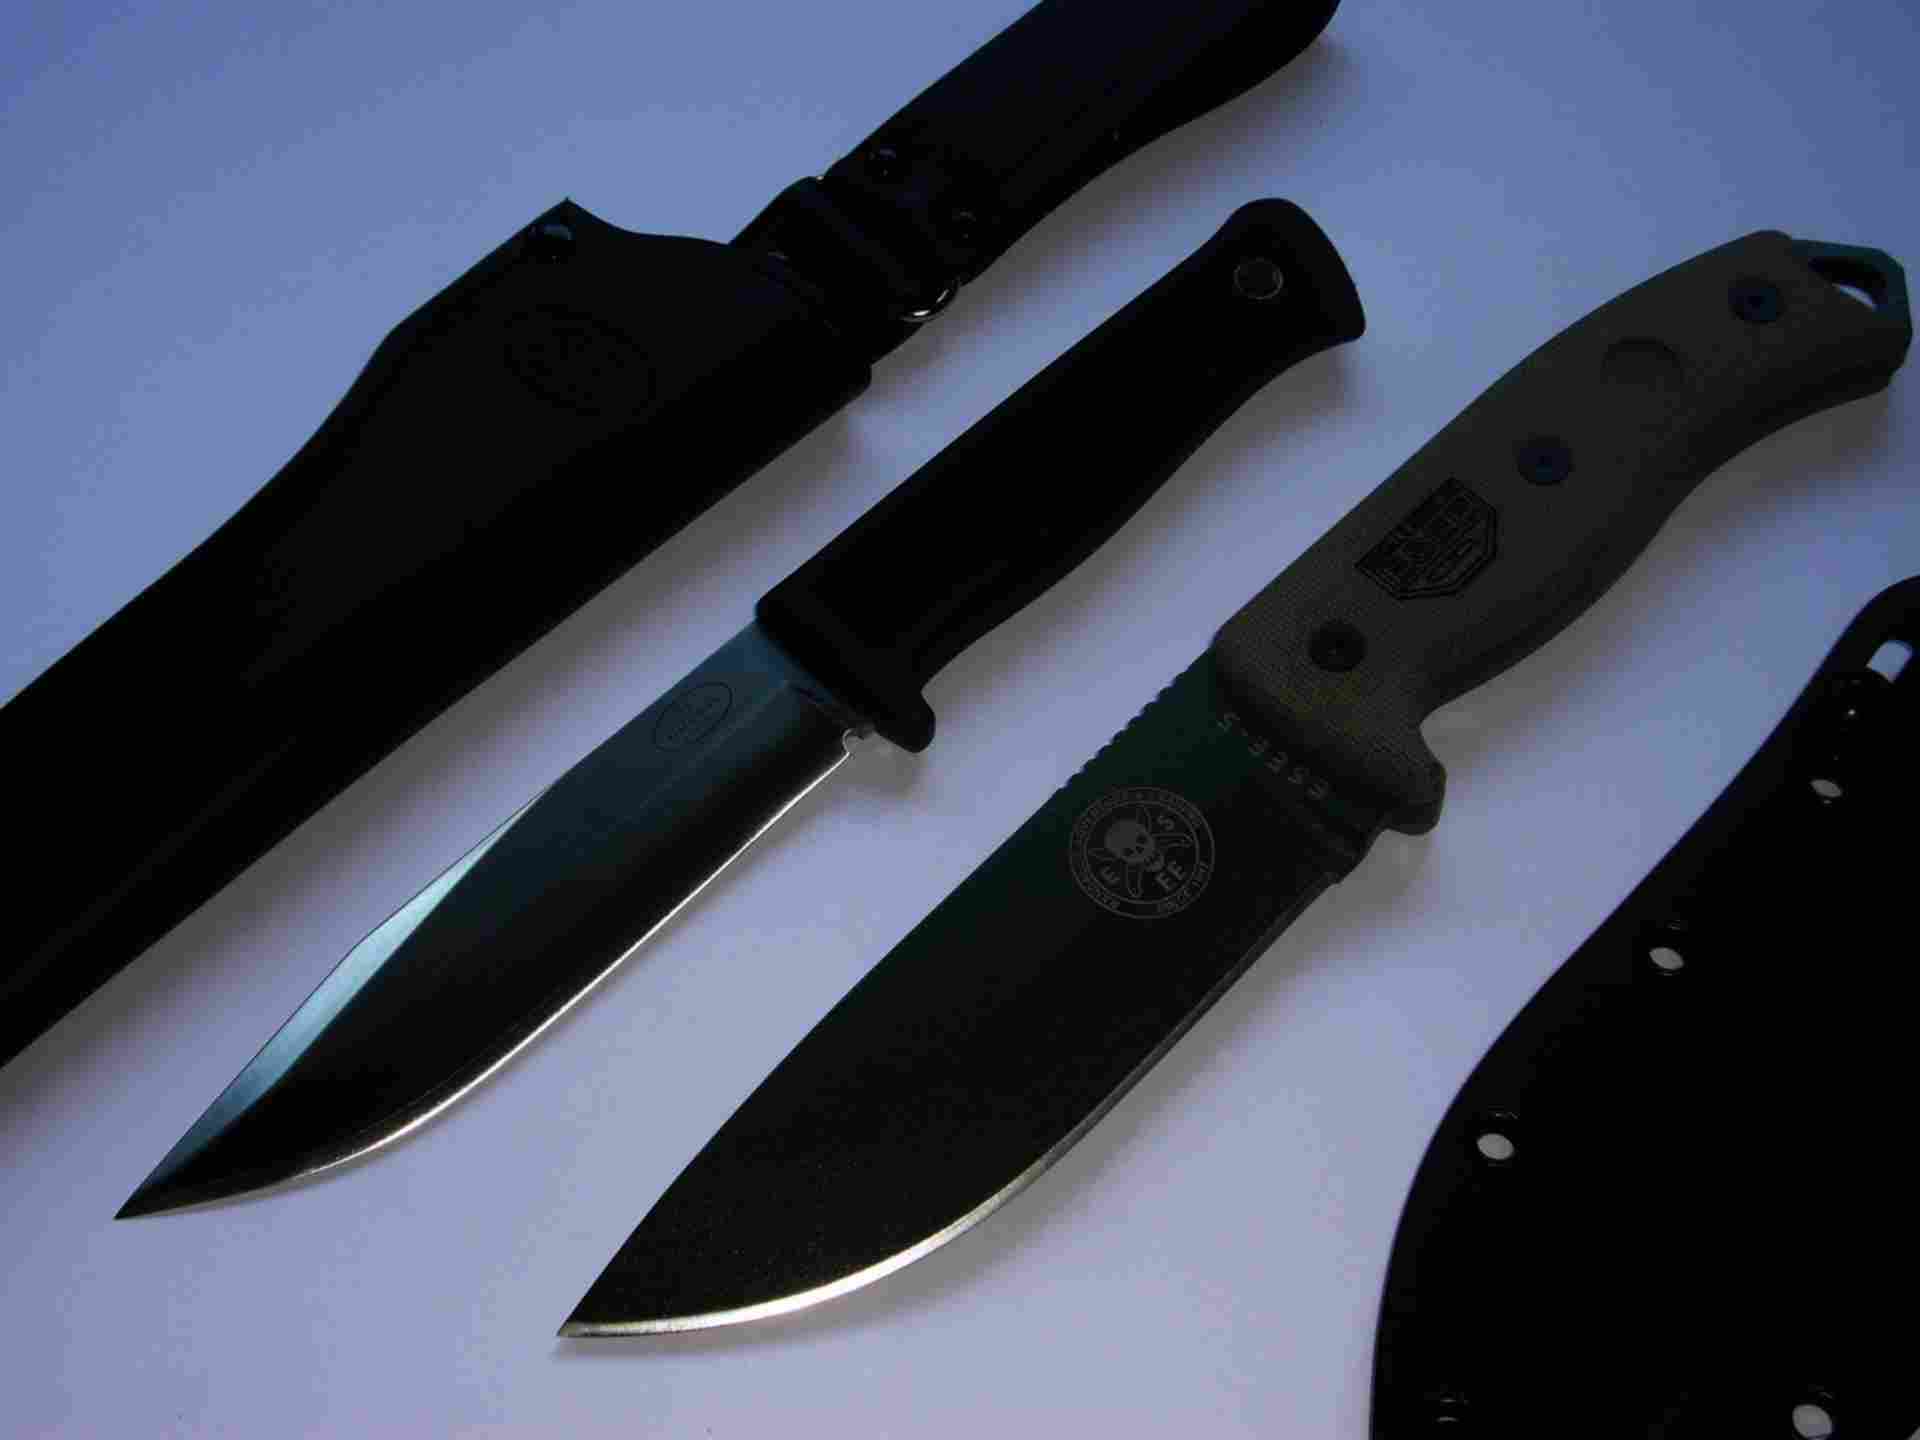 Ножи купить в пензе. YJ; Luxe sale нож. Baars kat ch911dh купить ножи. Nightwolf ножи купить.